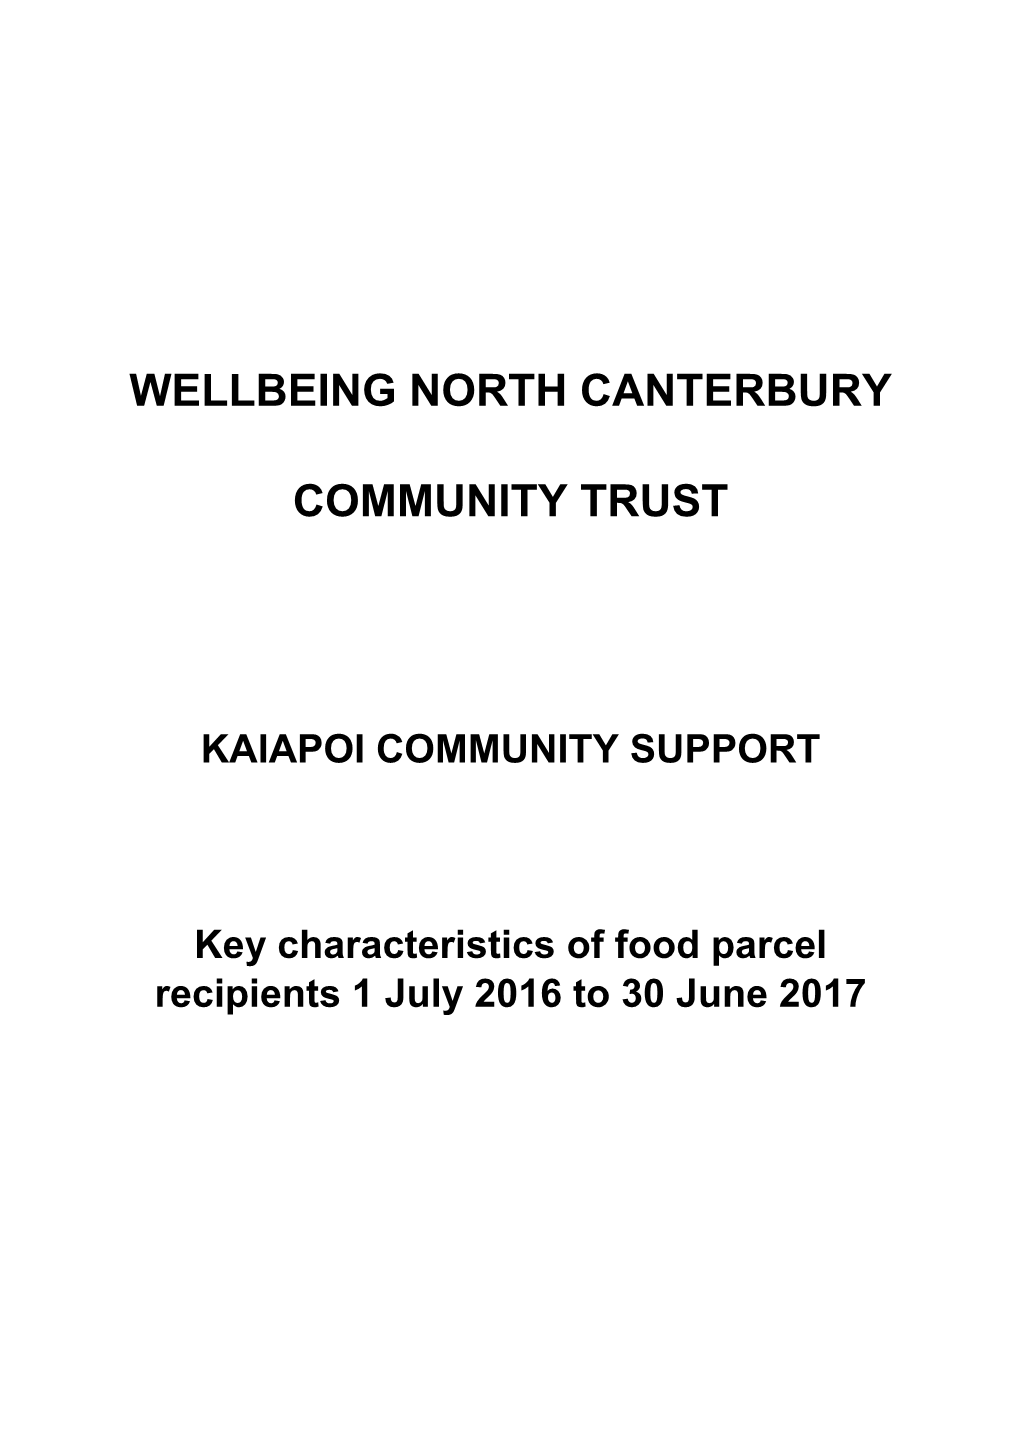 Wellbeing North Canterbury Community Trust